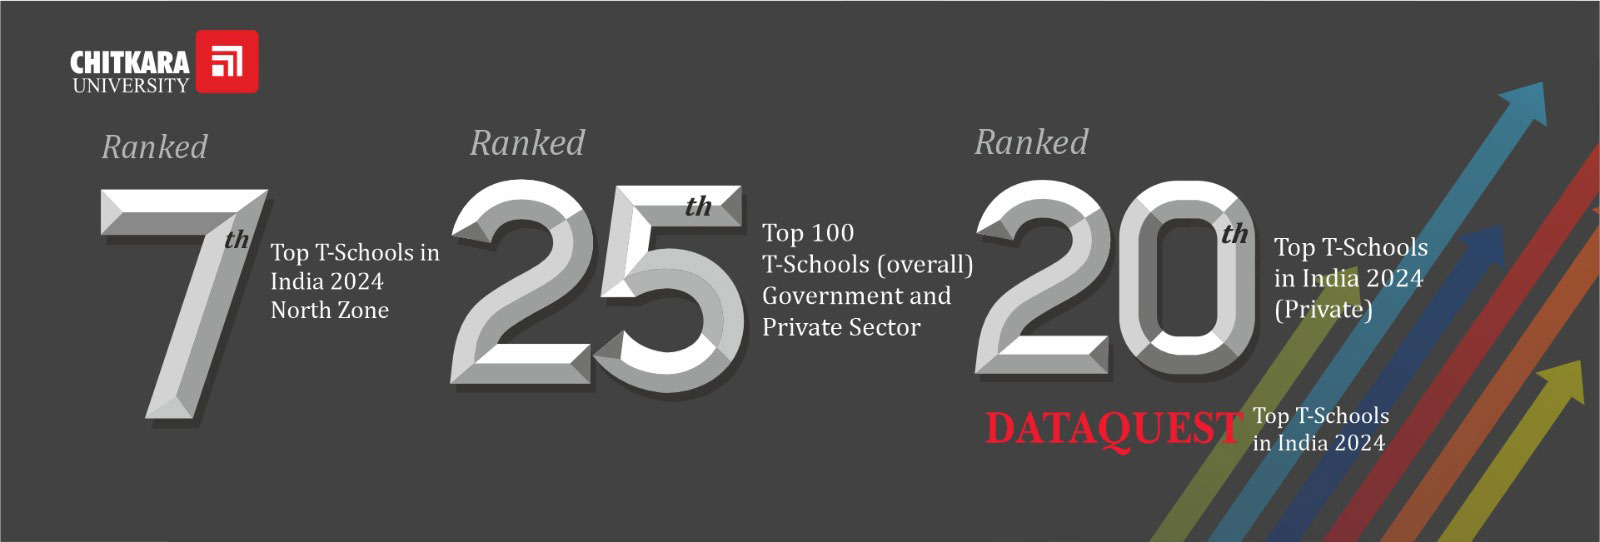 Dataquest Ranking 2024 - Chitkara University